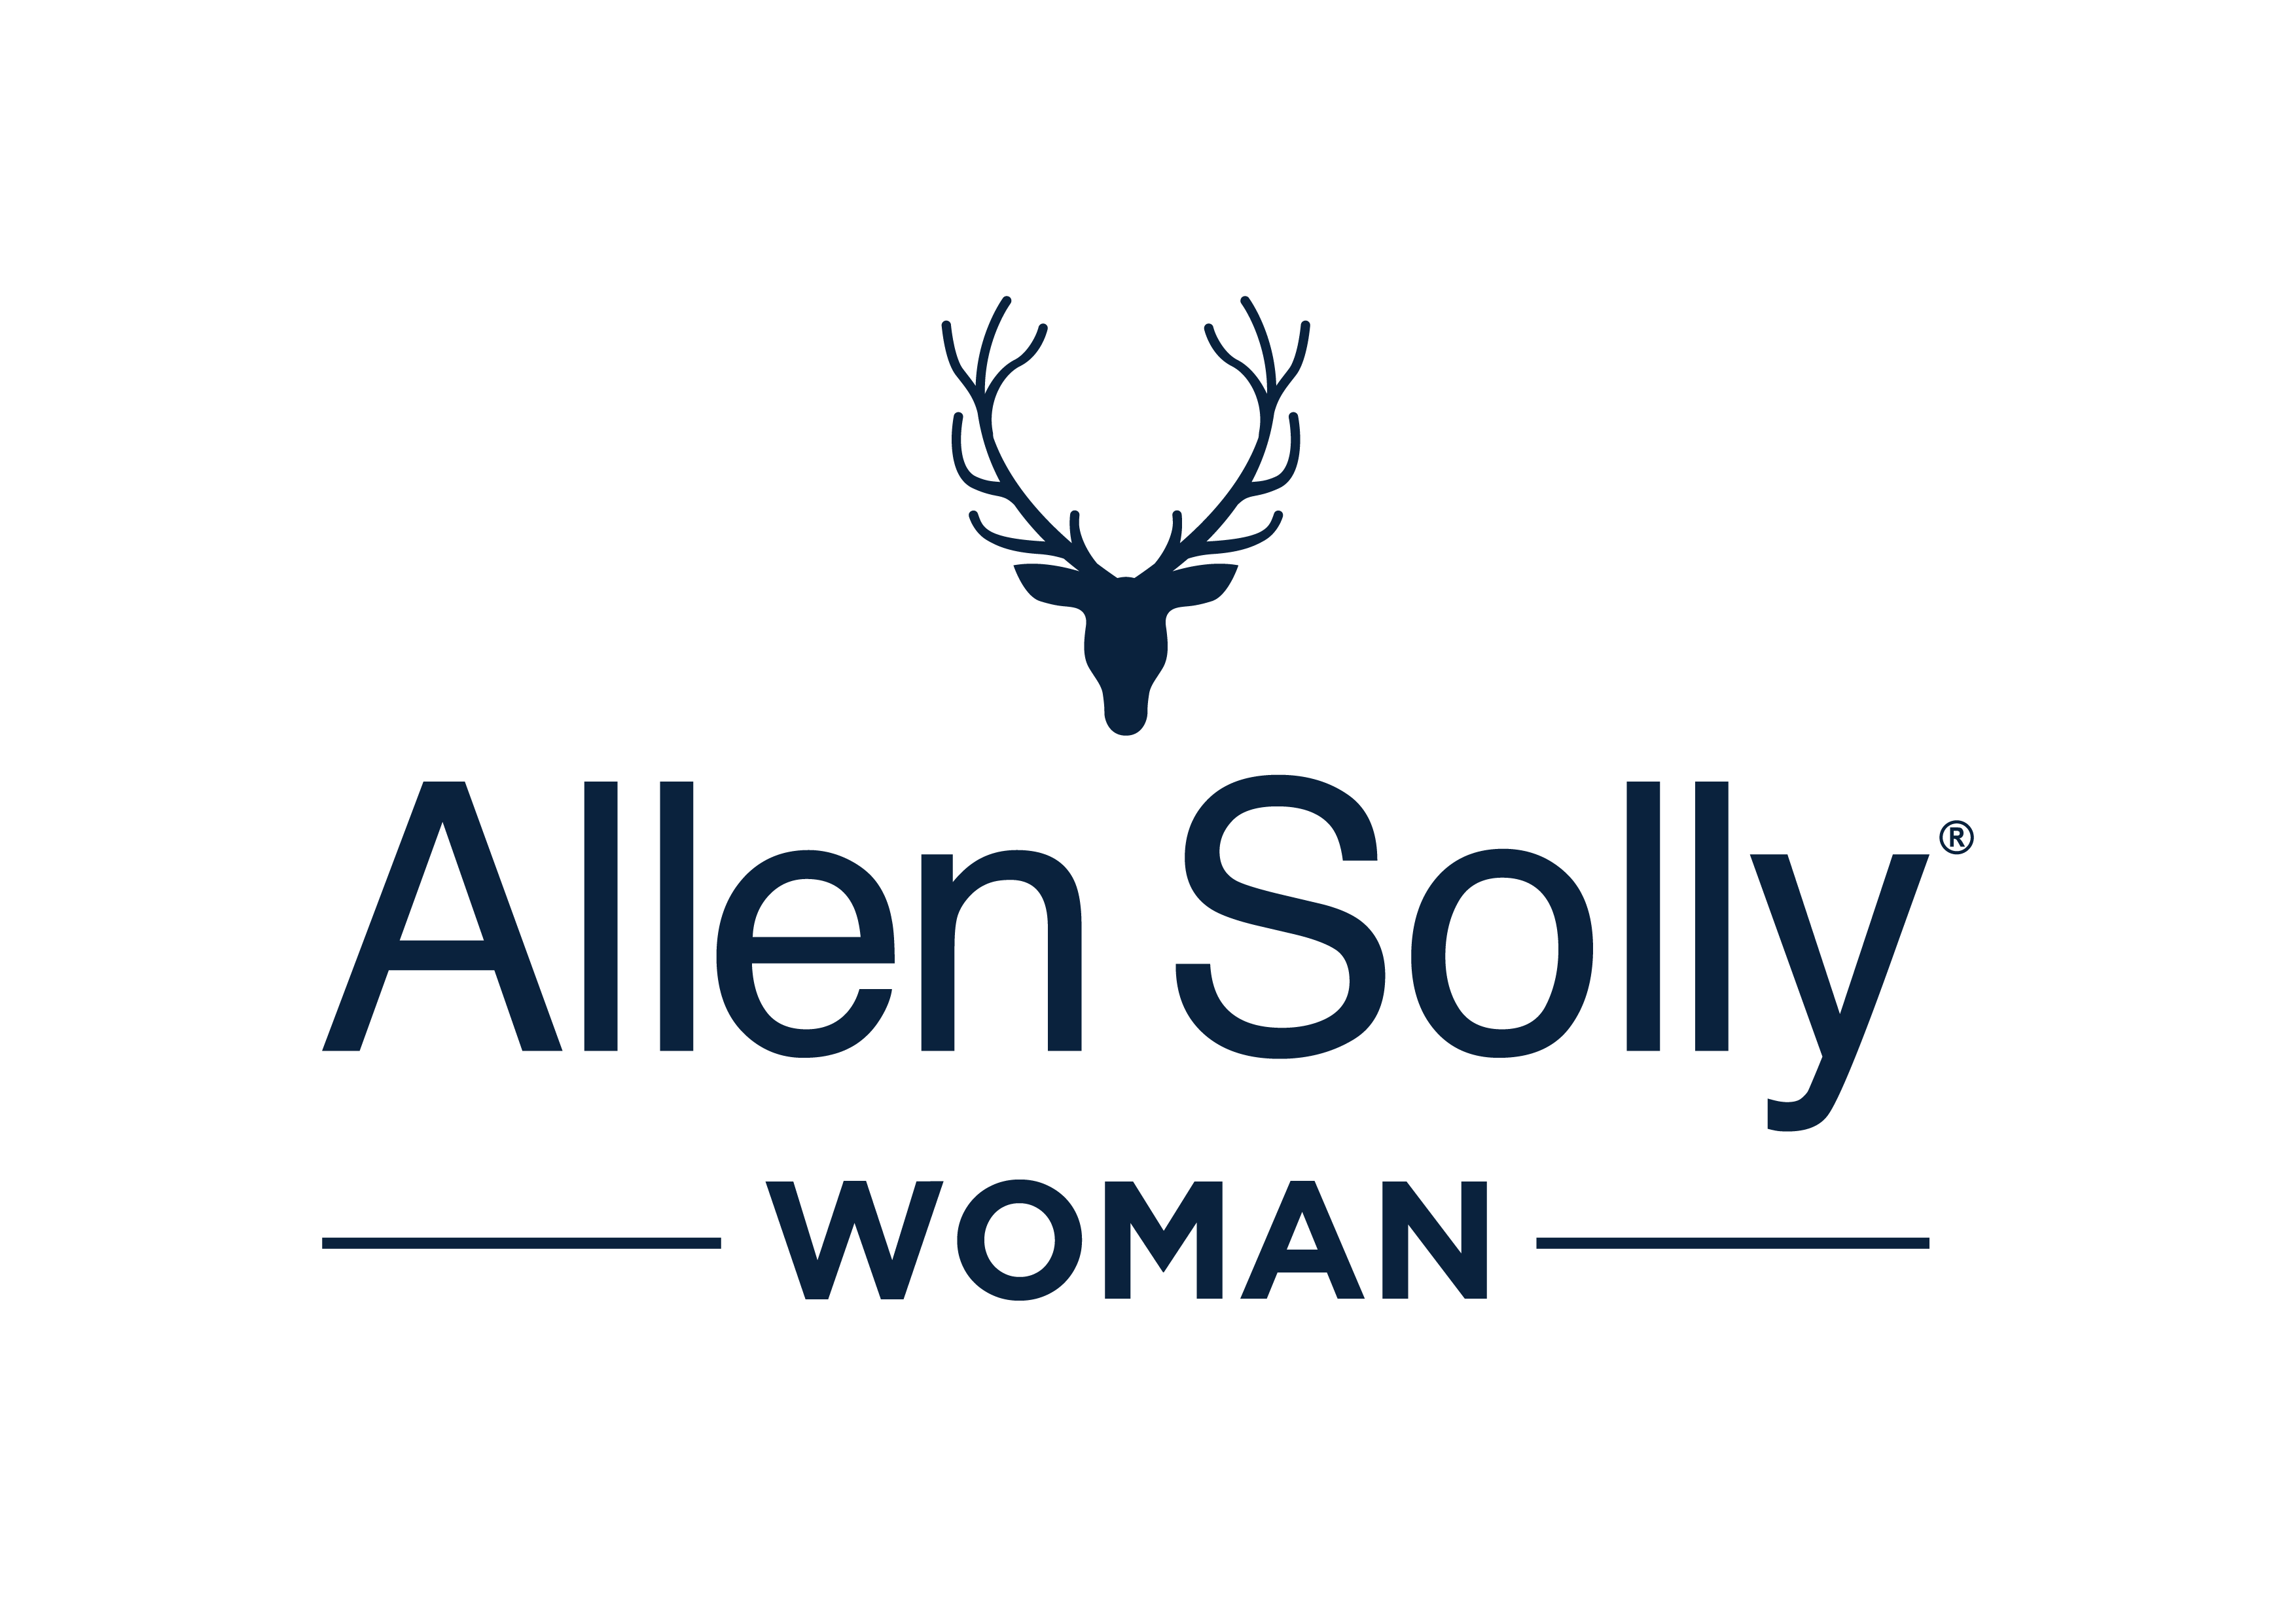 Buy Beige Trousers & Pants for Men by ALLEN SOLLY Online | Ajio.com